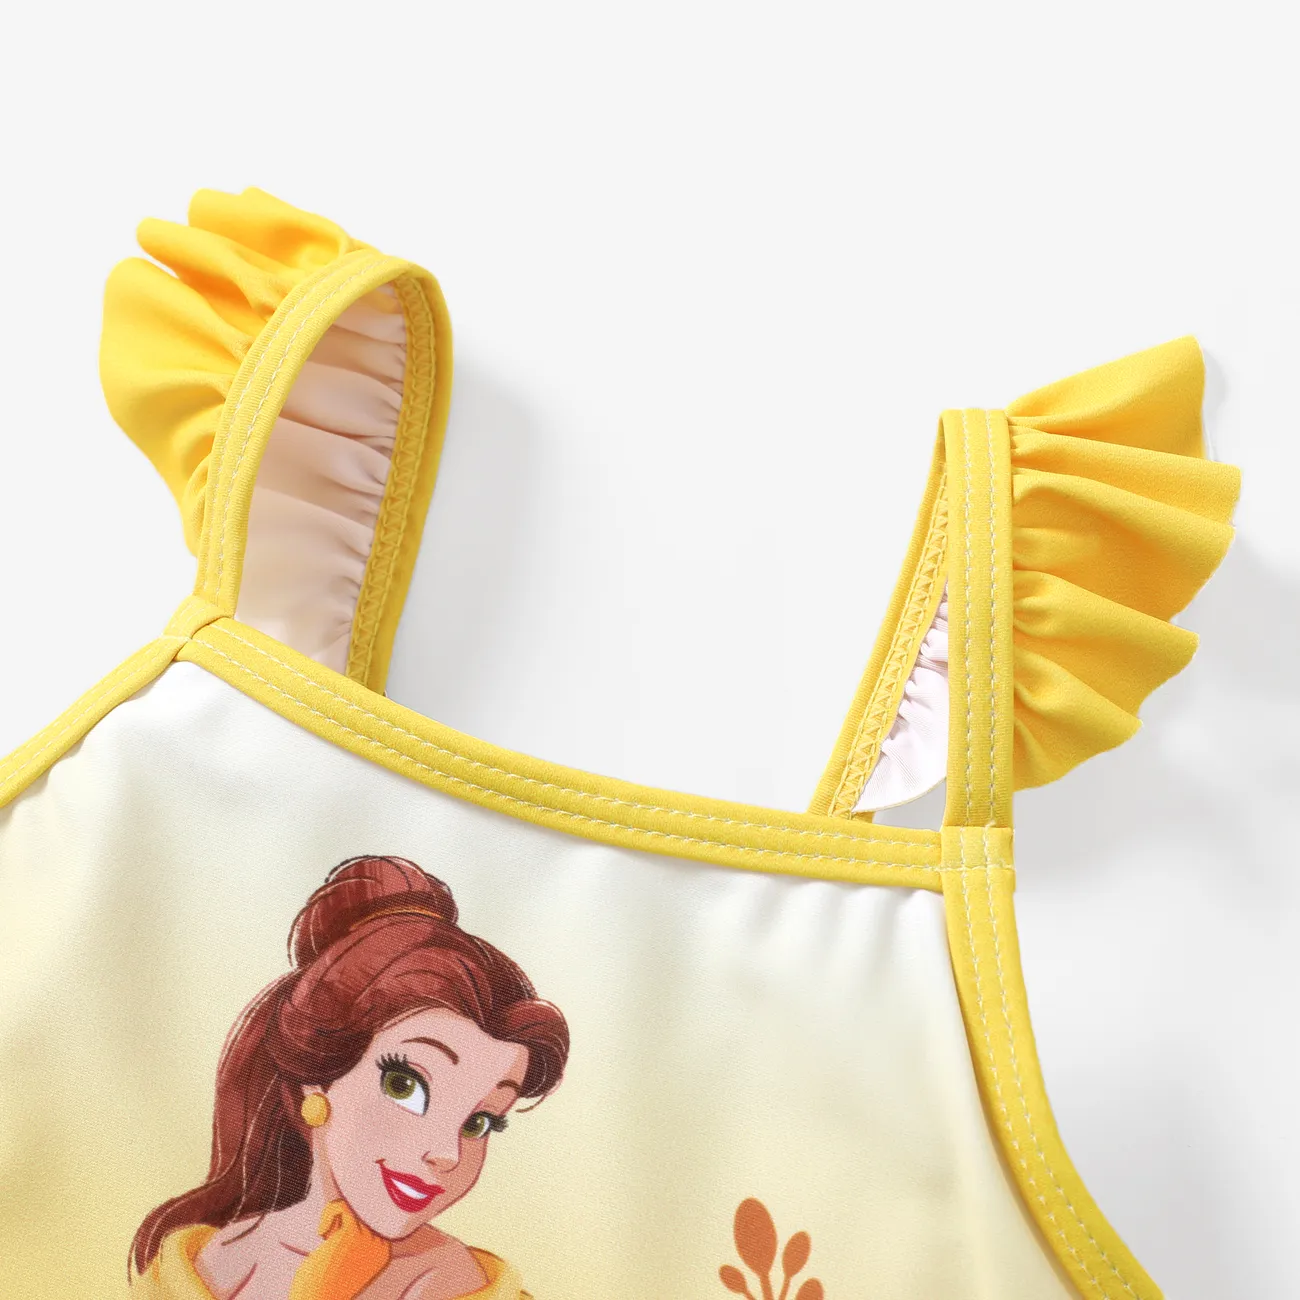 Disney Princess Niño pequeño Chica Costura de tela Infantil Trajes de baño Amarillo big image 1